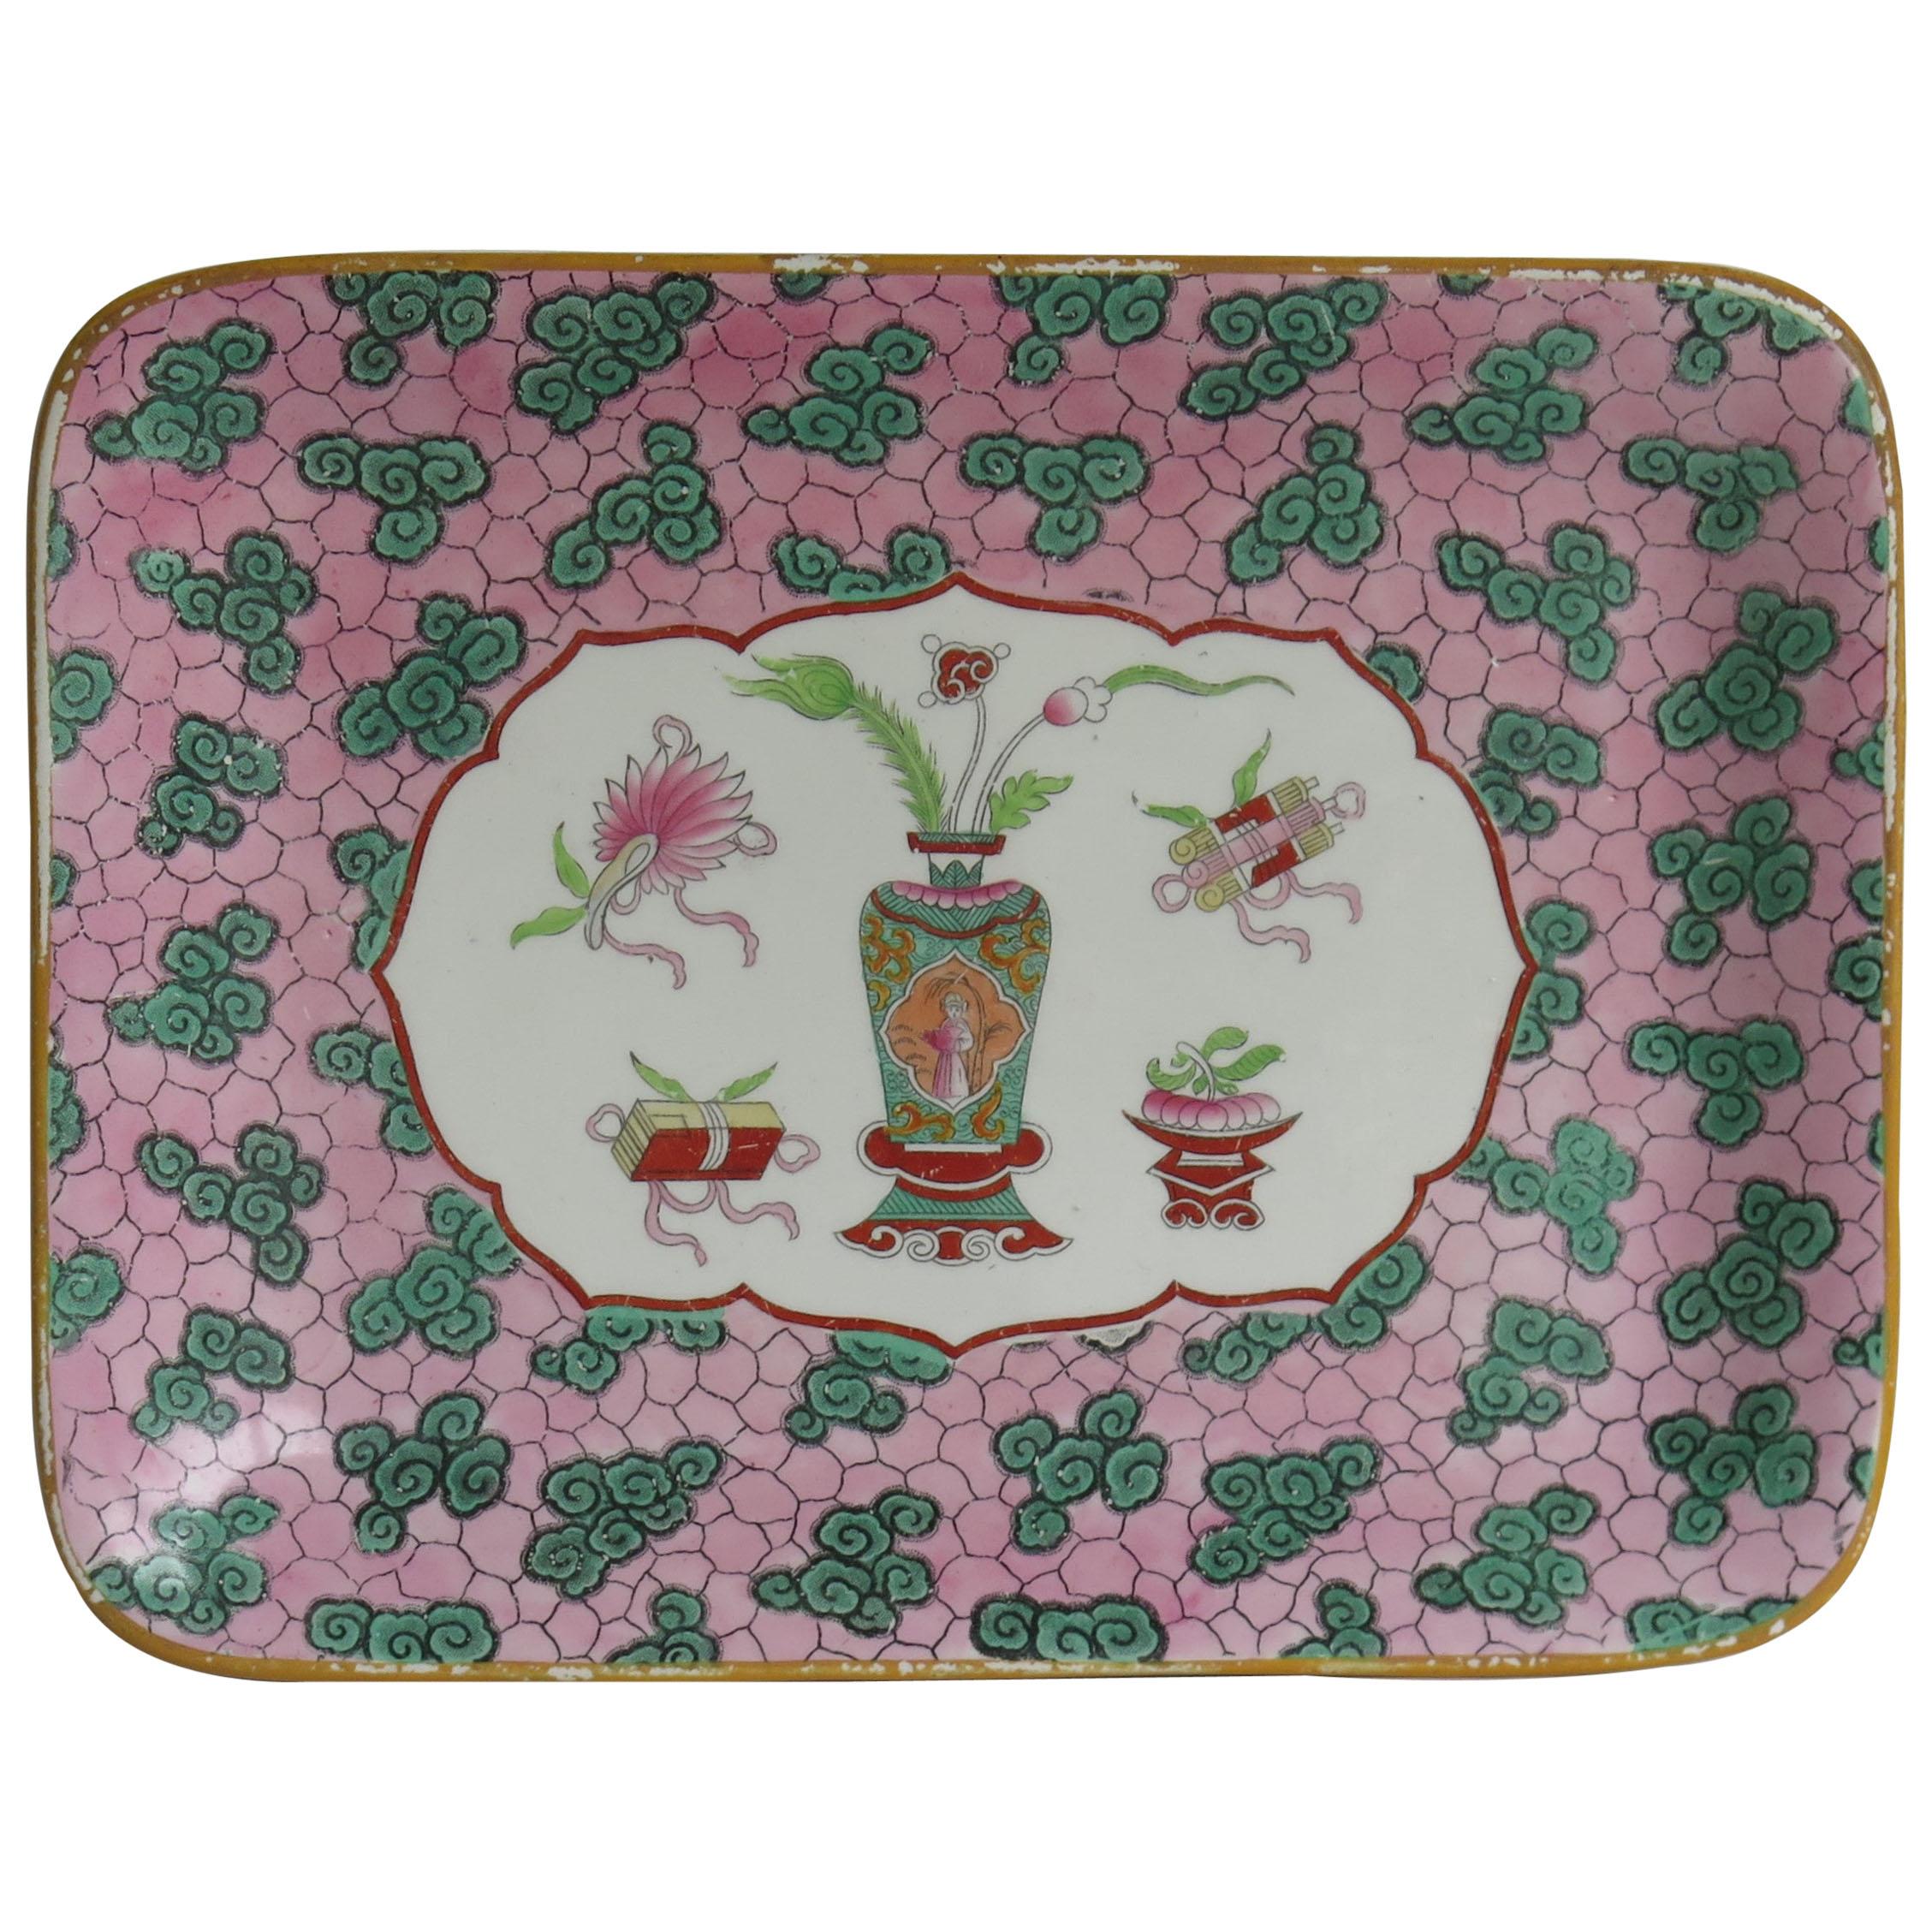 Large Mason's Ashworth Ironstone Tray in Chinese Antiquities Pattern, circa 1870